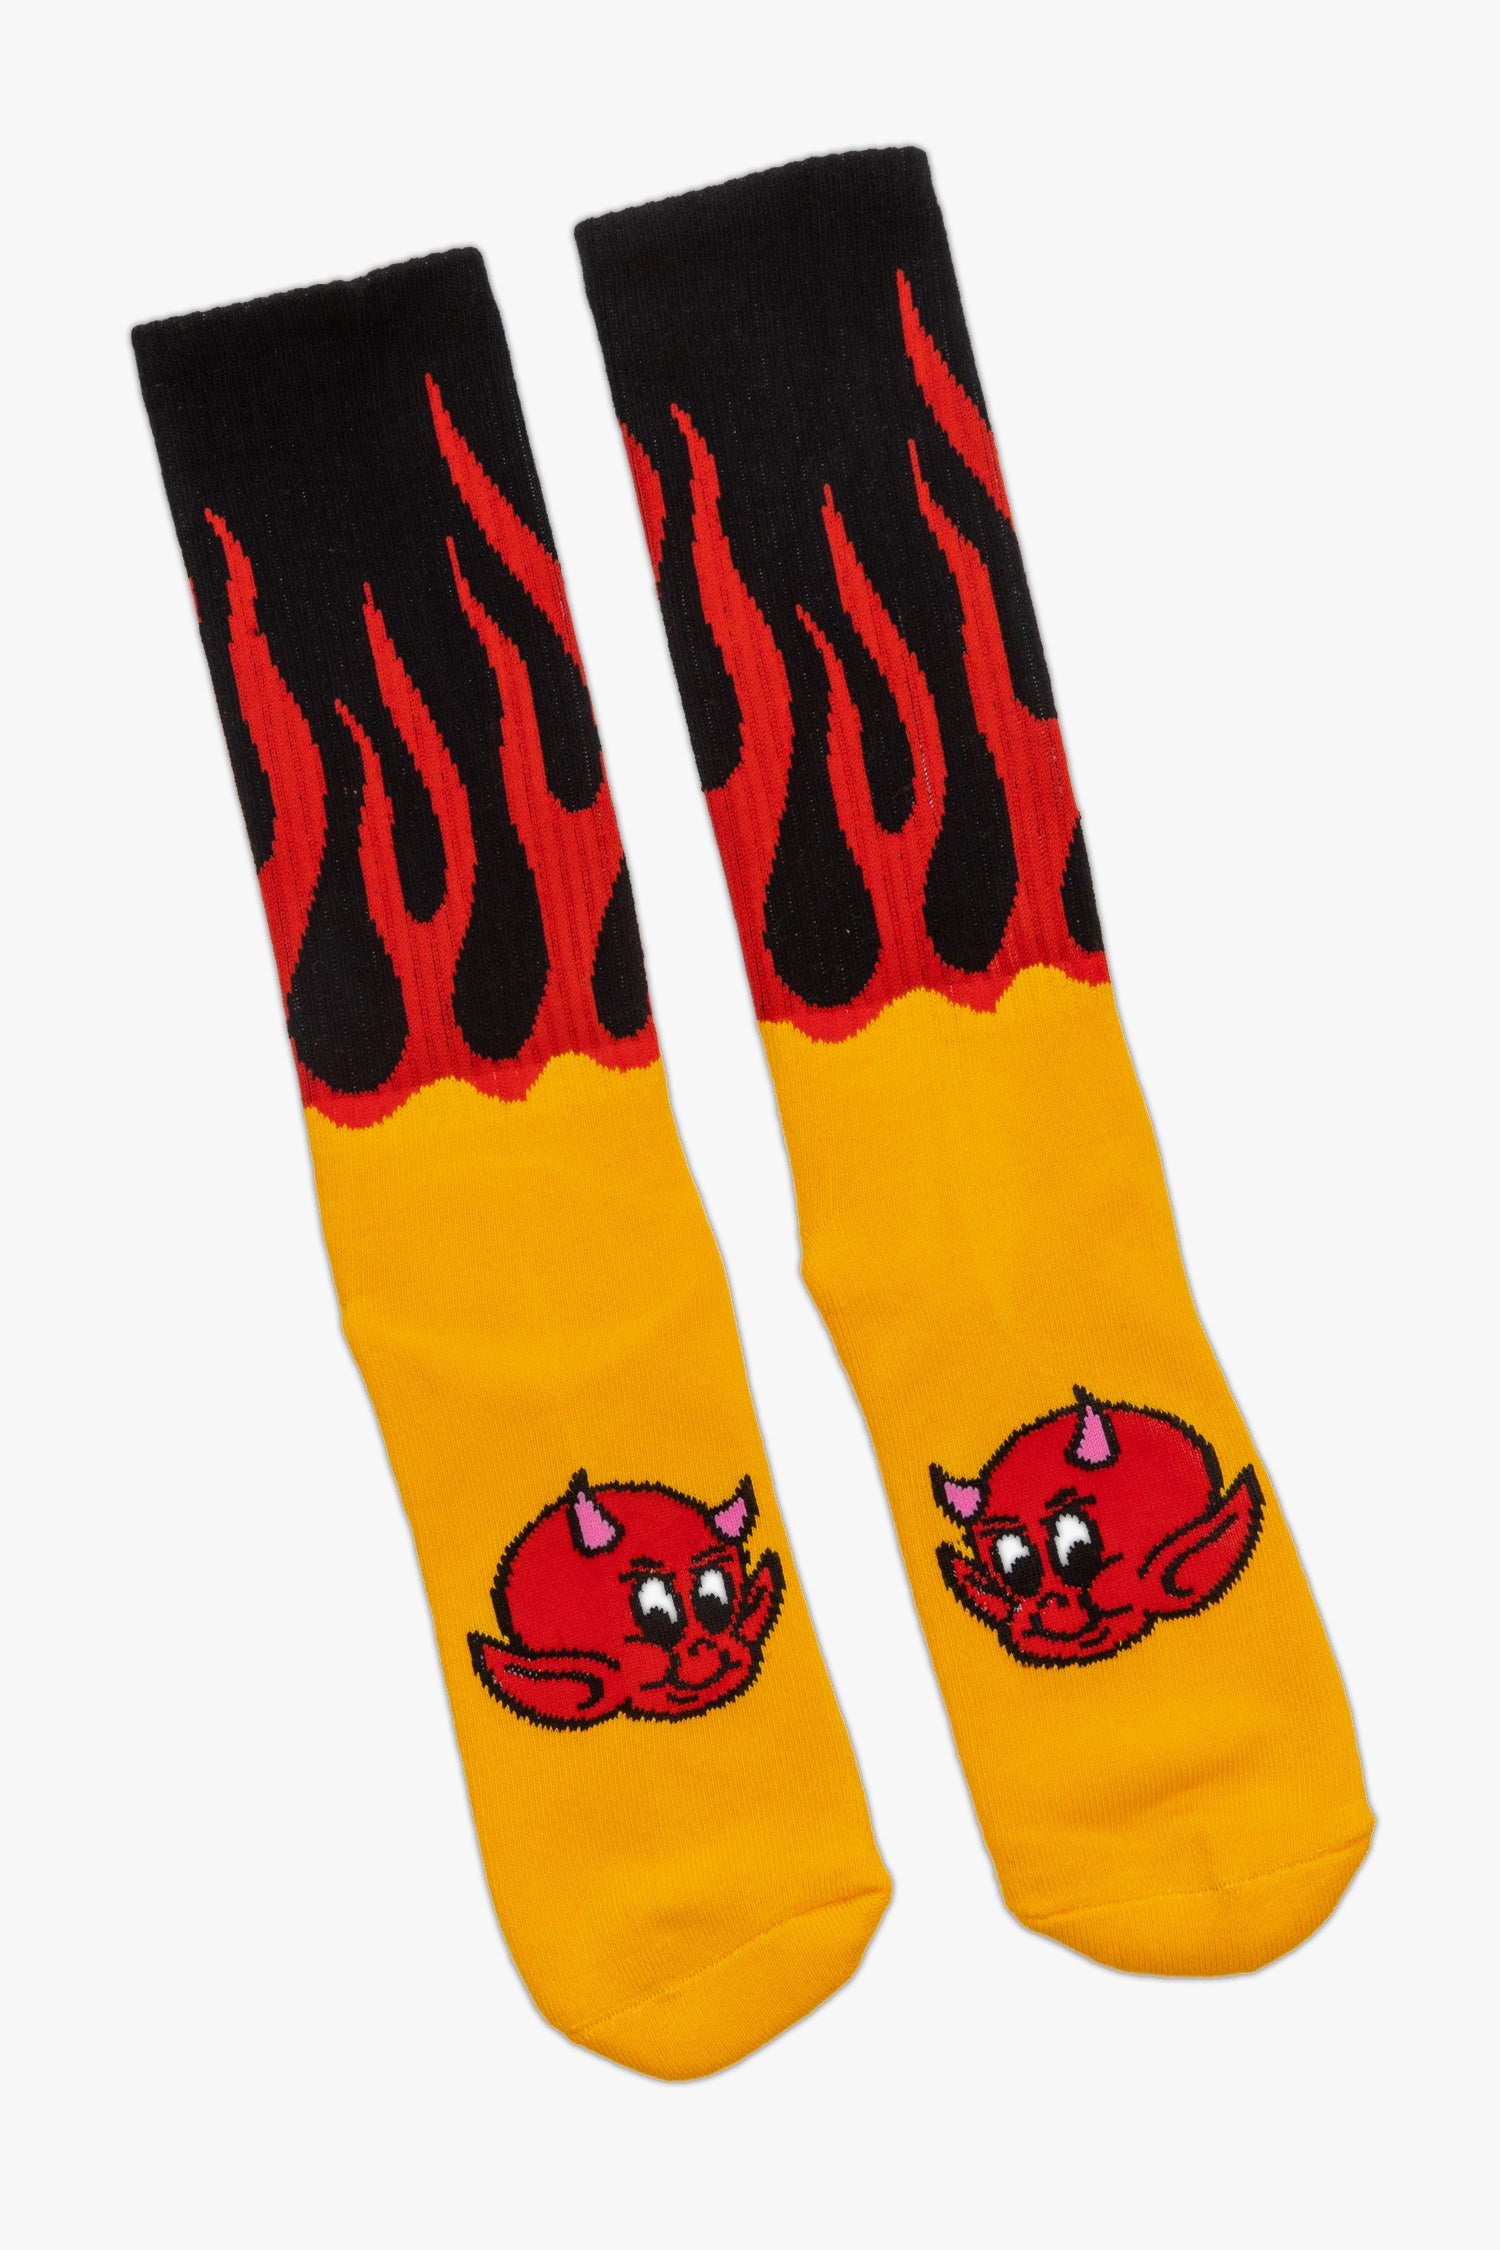 Burning Hot Stuff Socks - Indestructible MFG